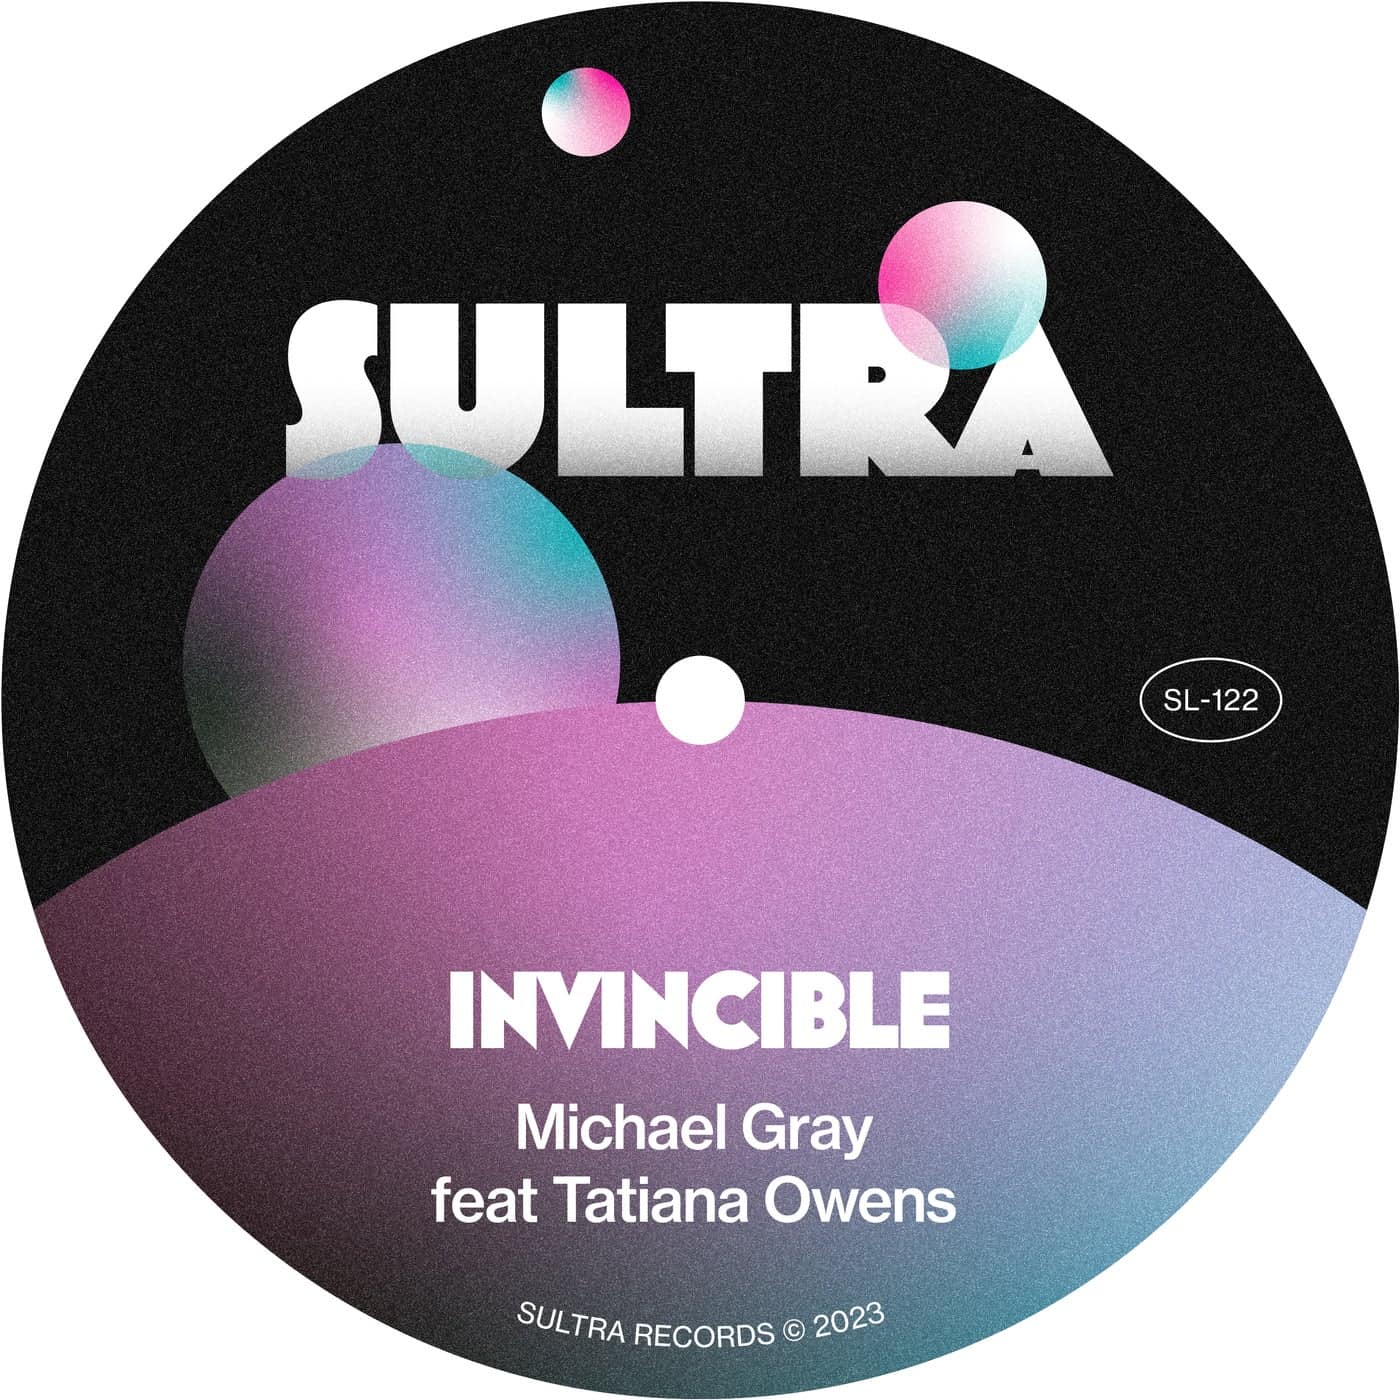 Release Cover: Michael Gray, Tatiana Owens - Invincible - Original Mix on Electrobuzz